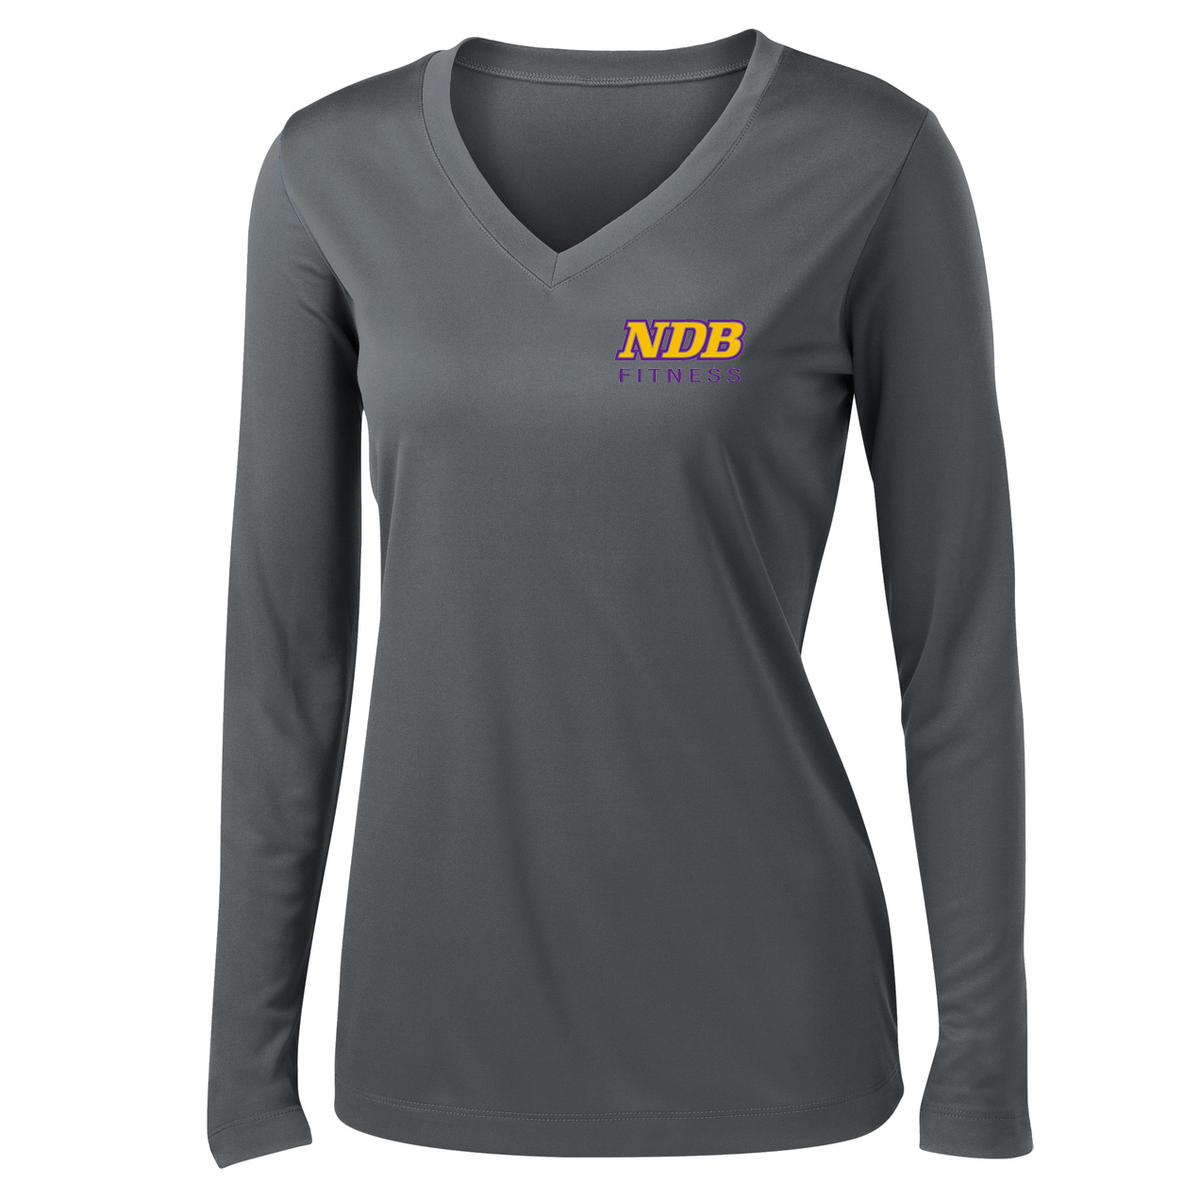 NDB Fitness Women's Long Sleeve Performance Shirt